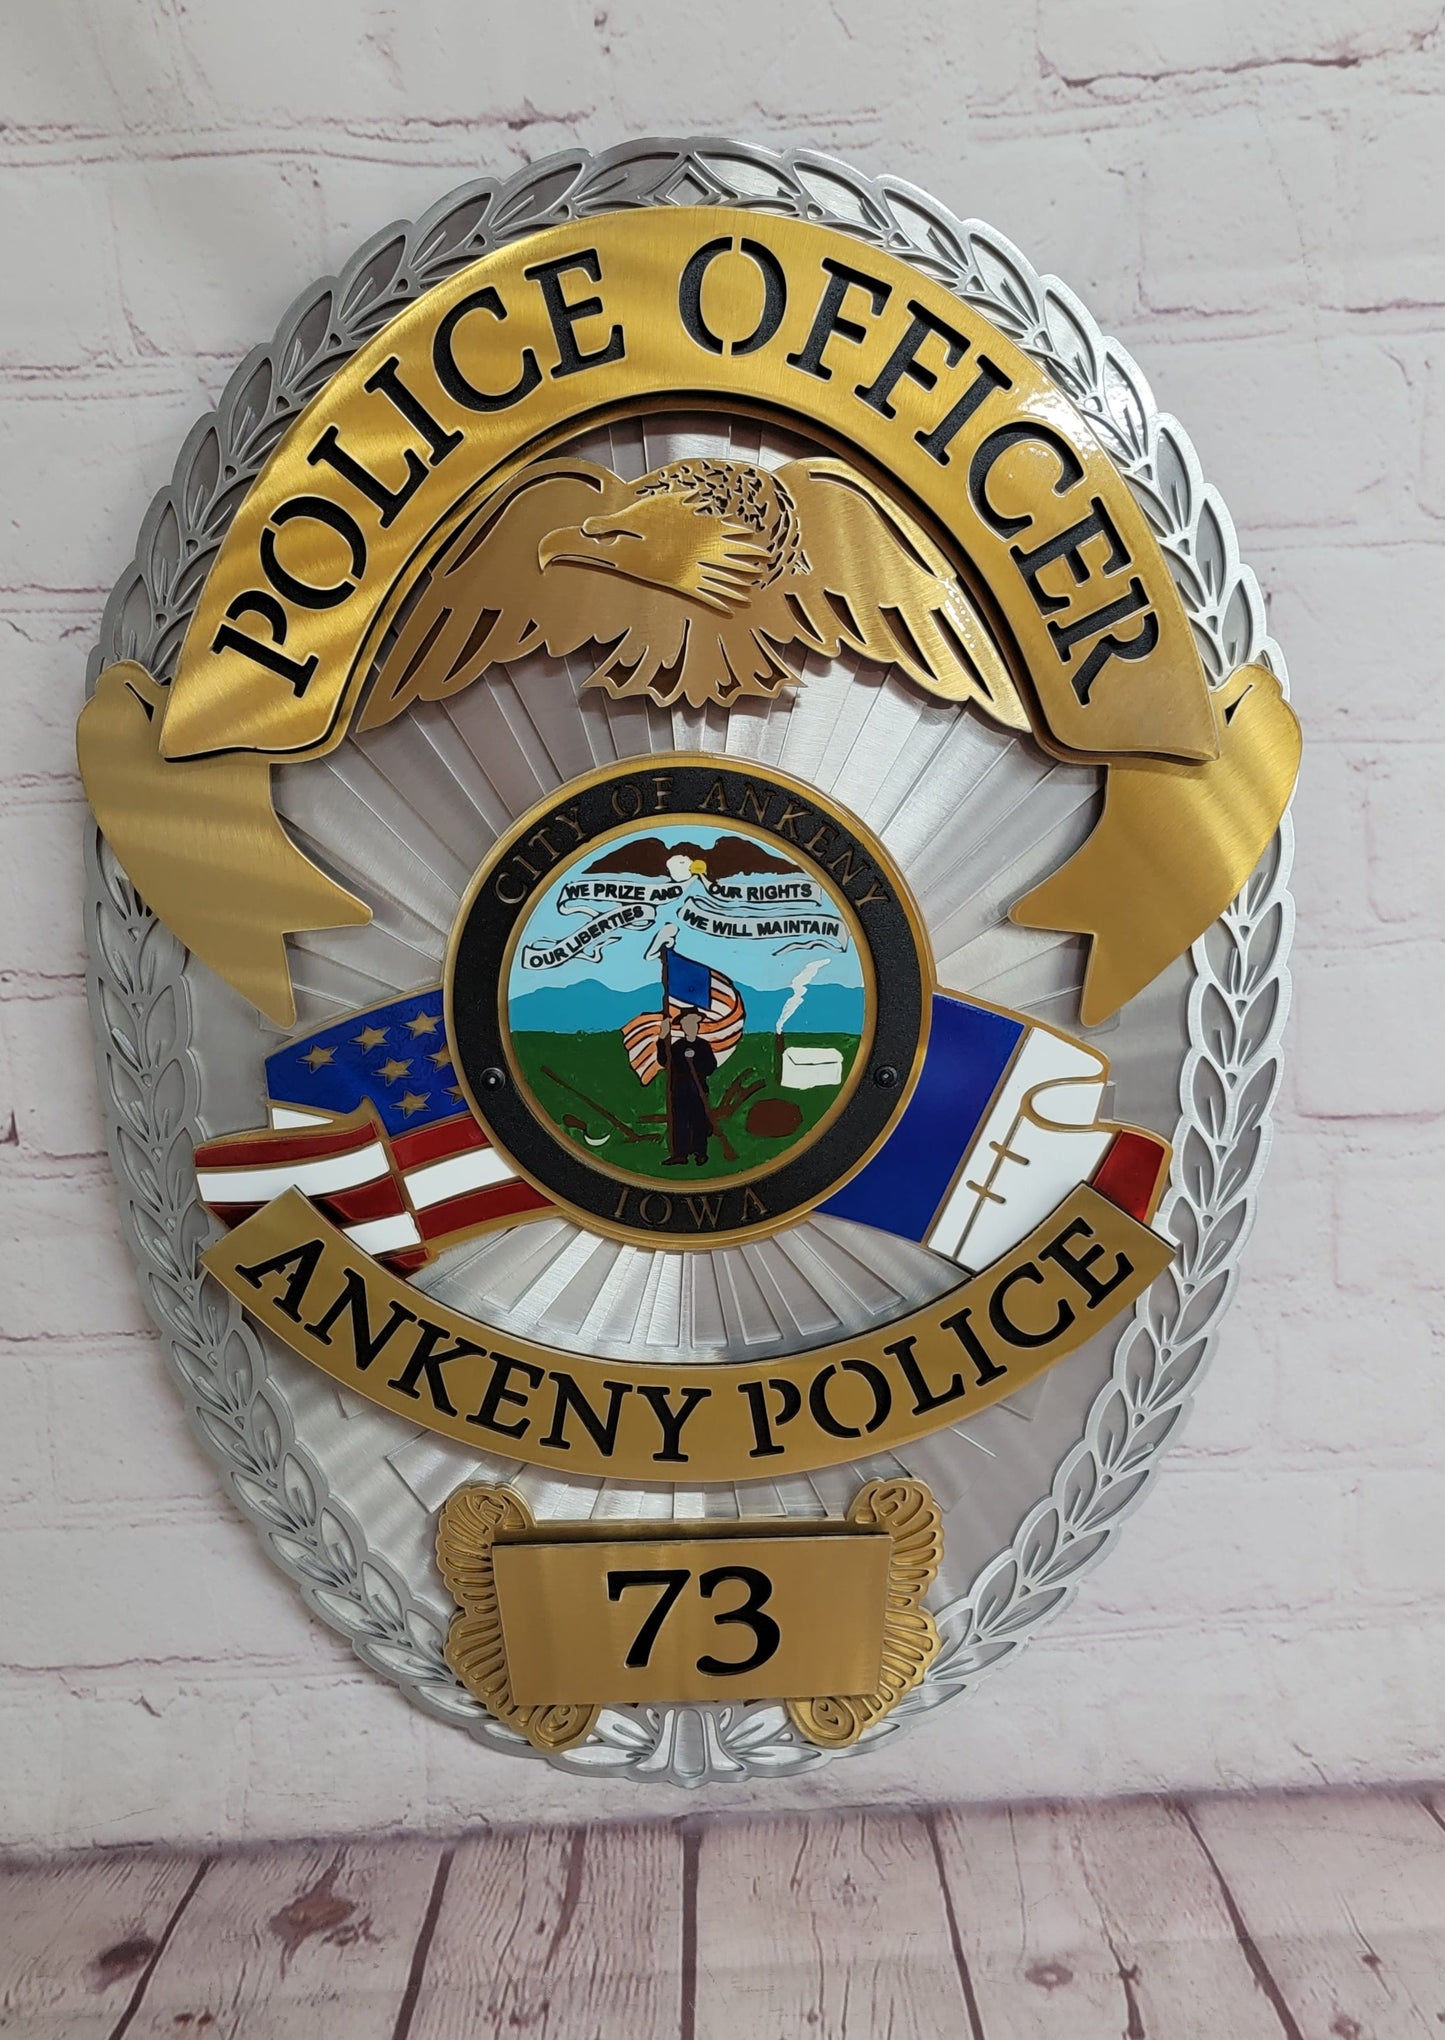 Ankeny Police Officer Badge